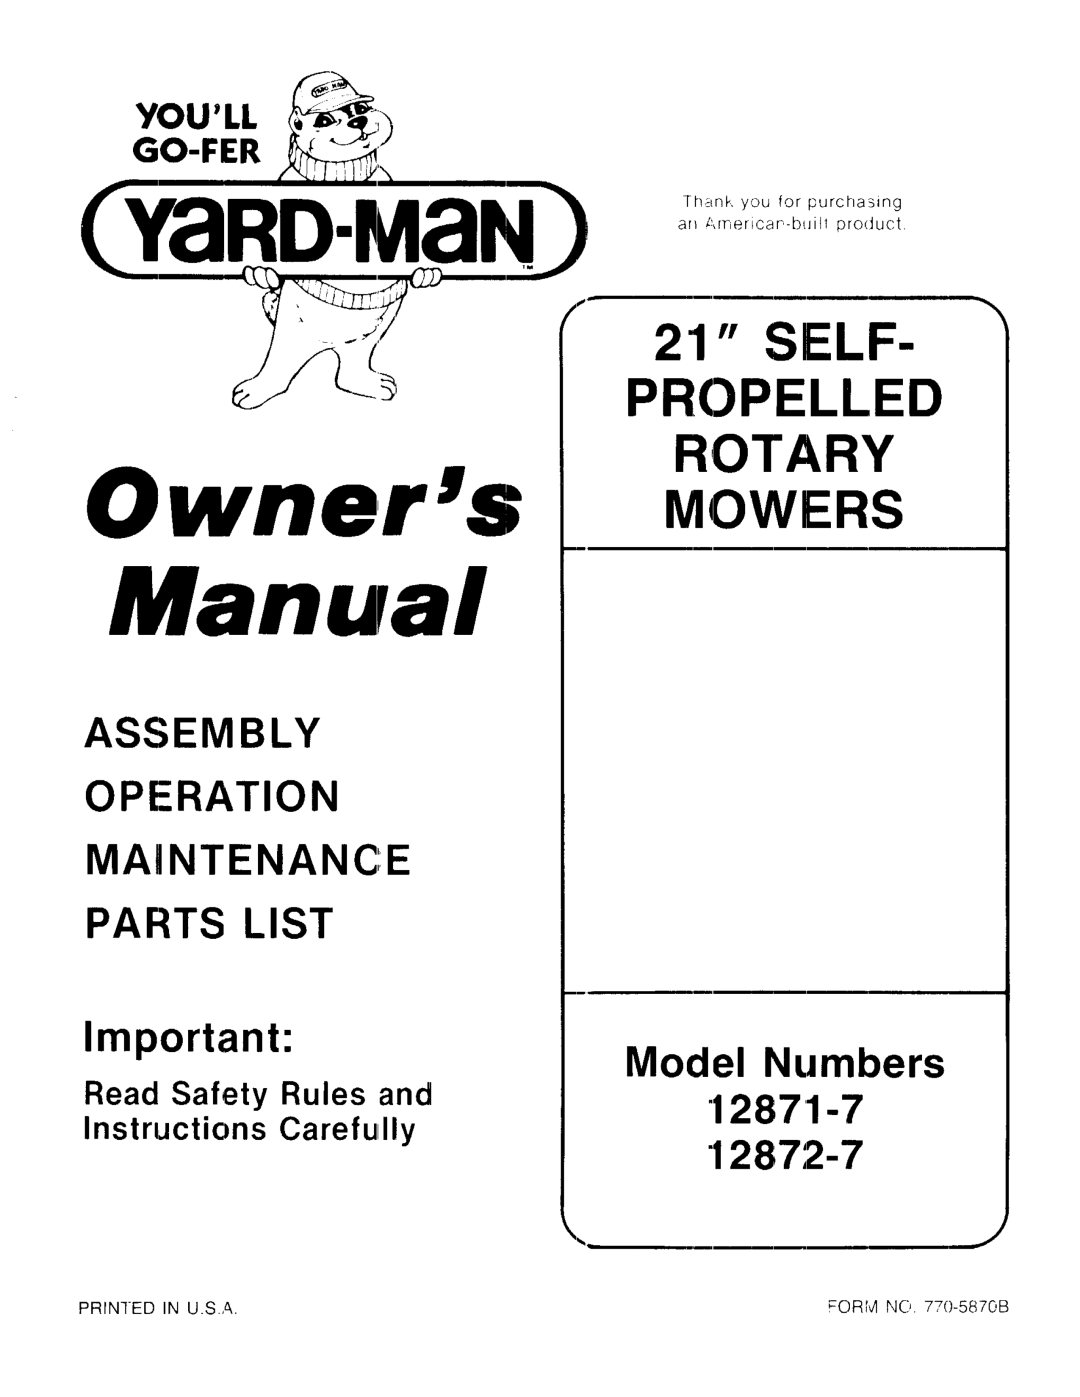 Yard-Man 12872-7, 12871-7 manual 